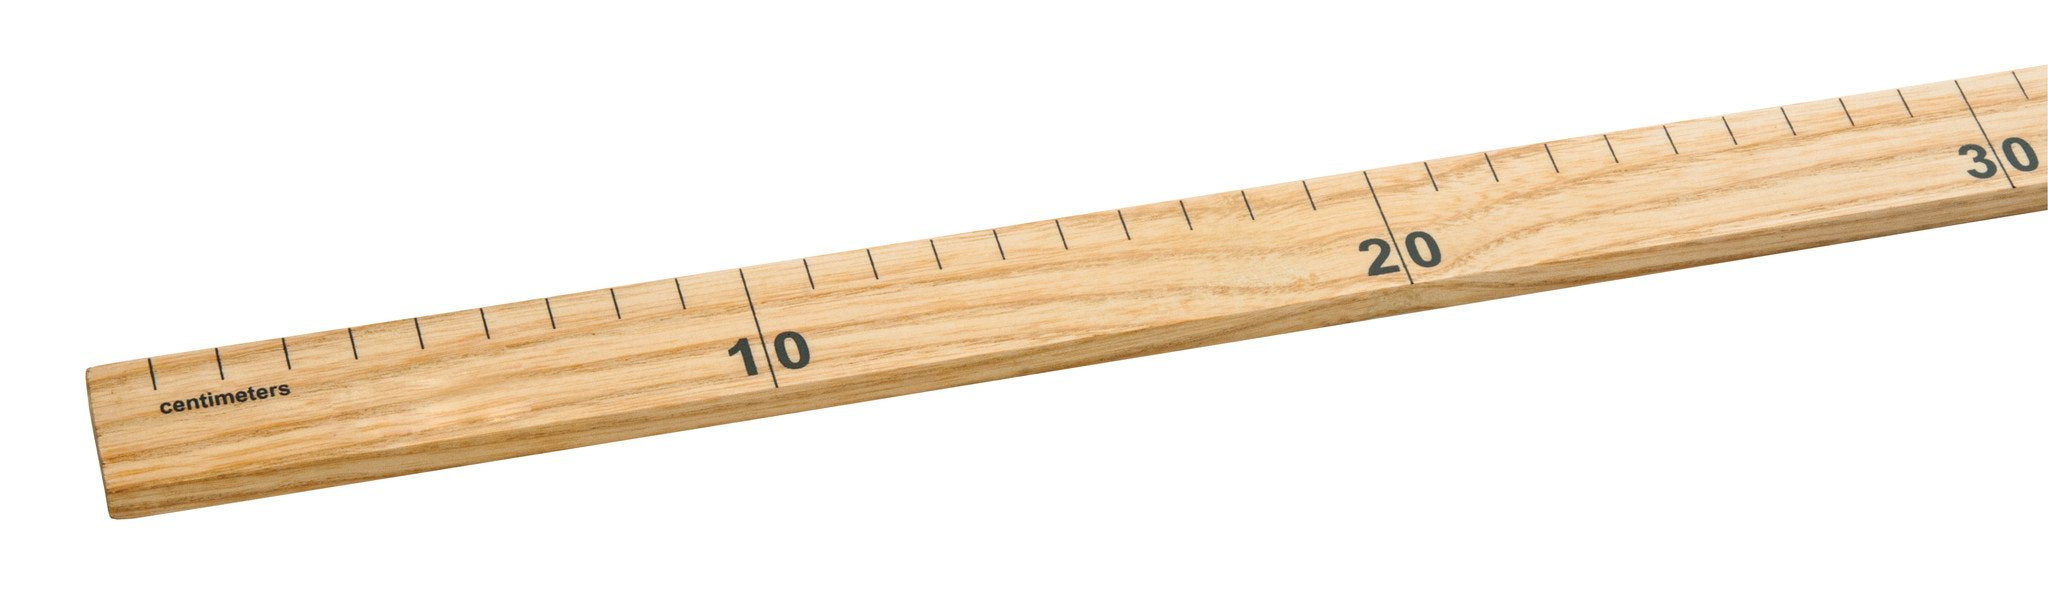 Meter Scale Wooden - Premium, One Meter - cm Reading